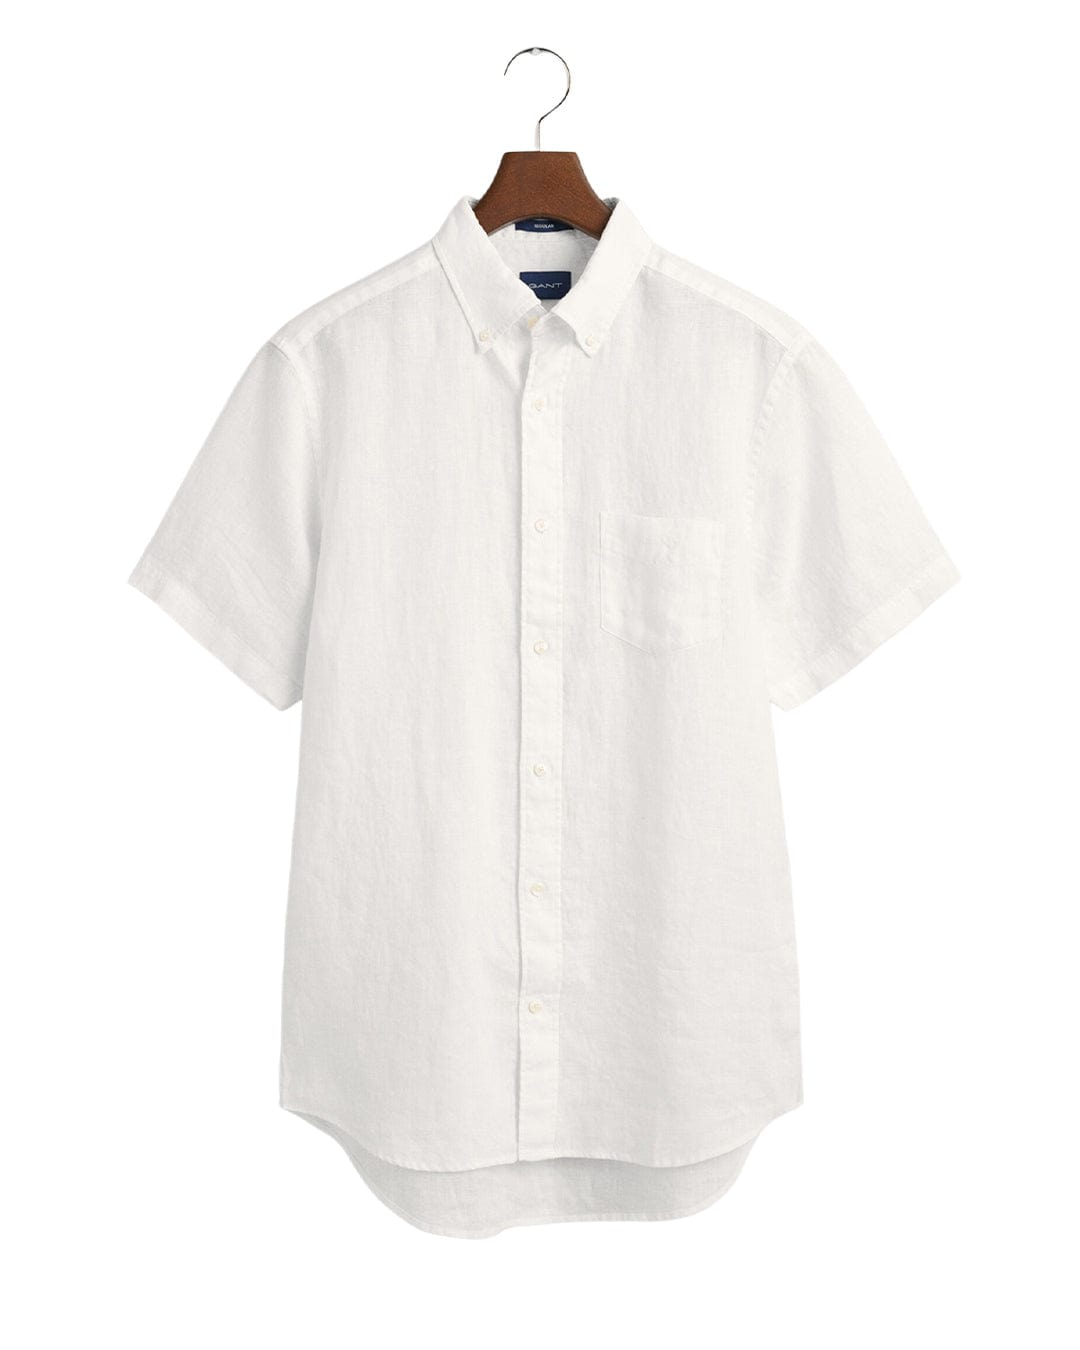 Gant Shirts Gant White Regular Fit Linen Short Sleeve Shirt